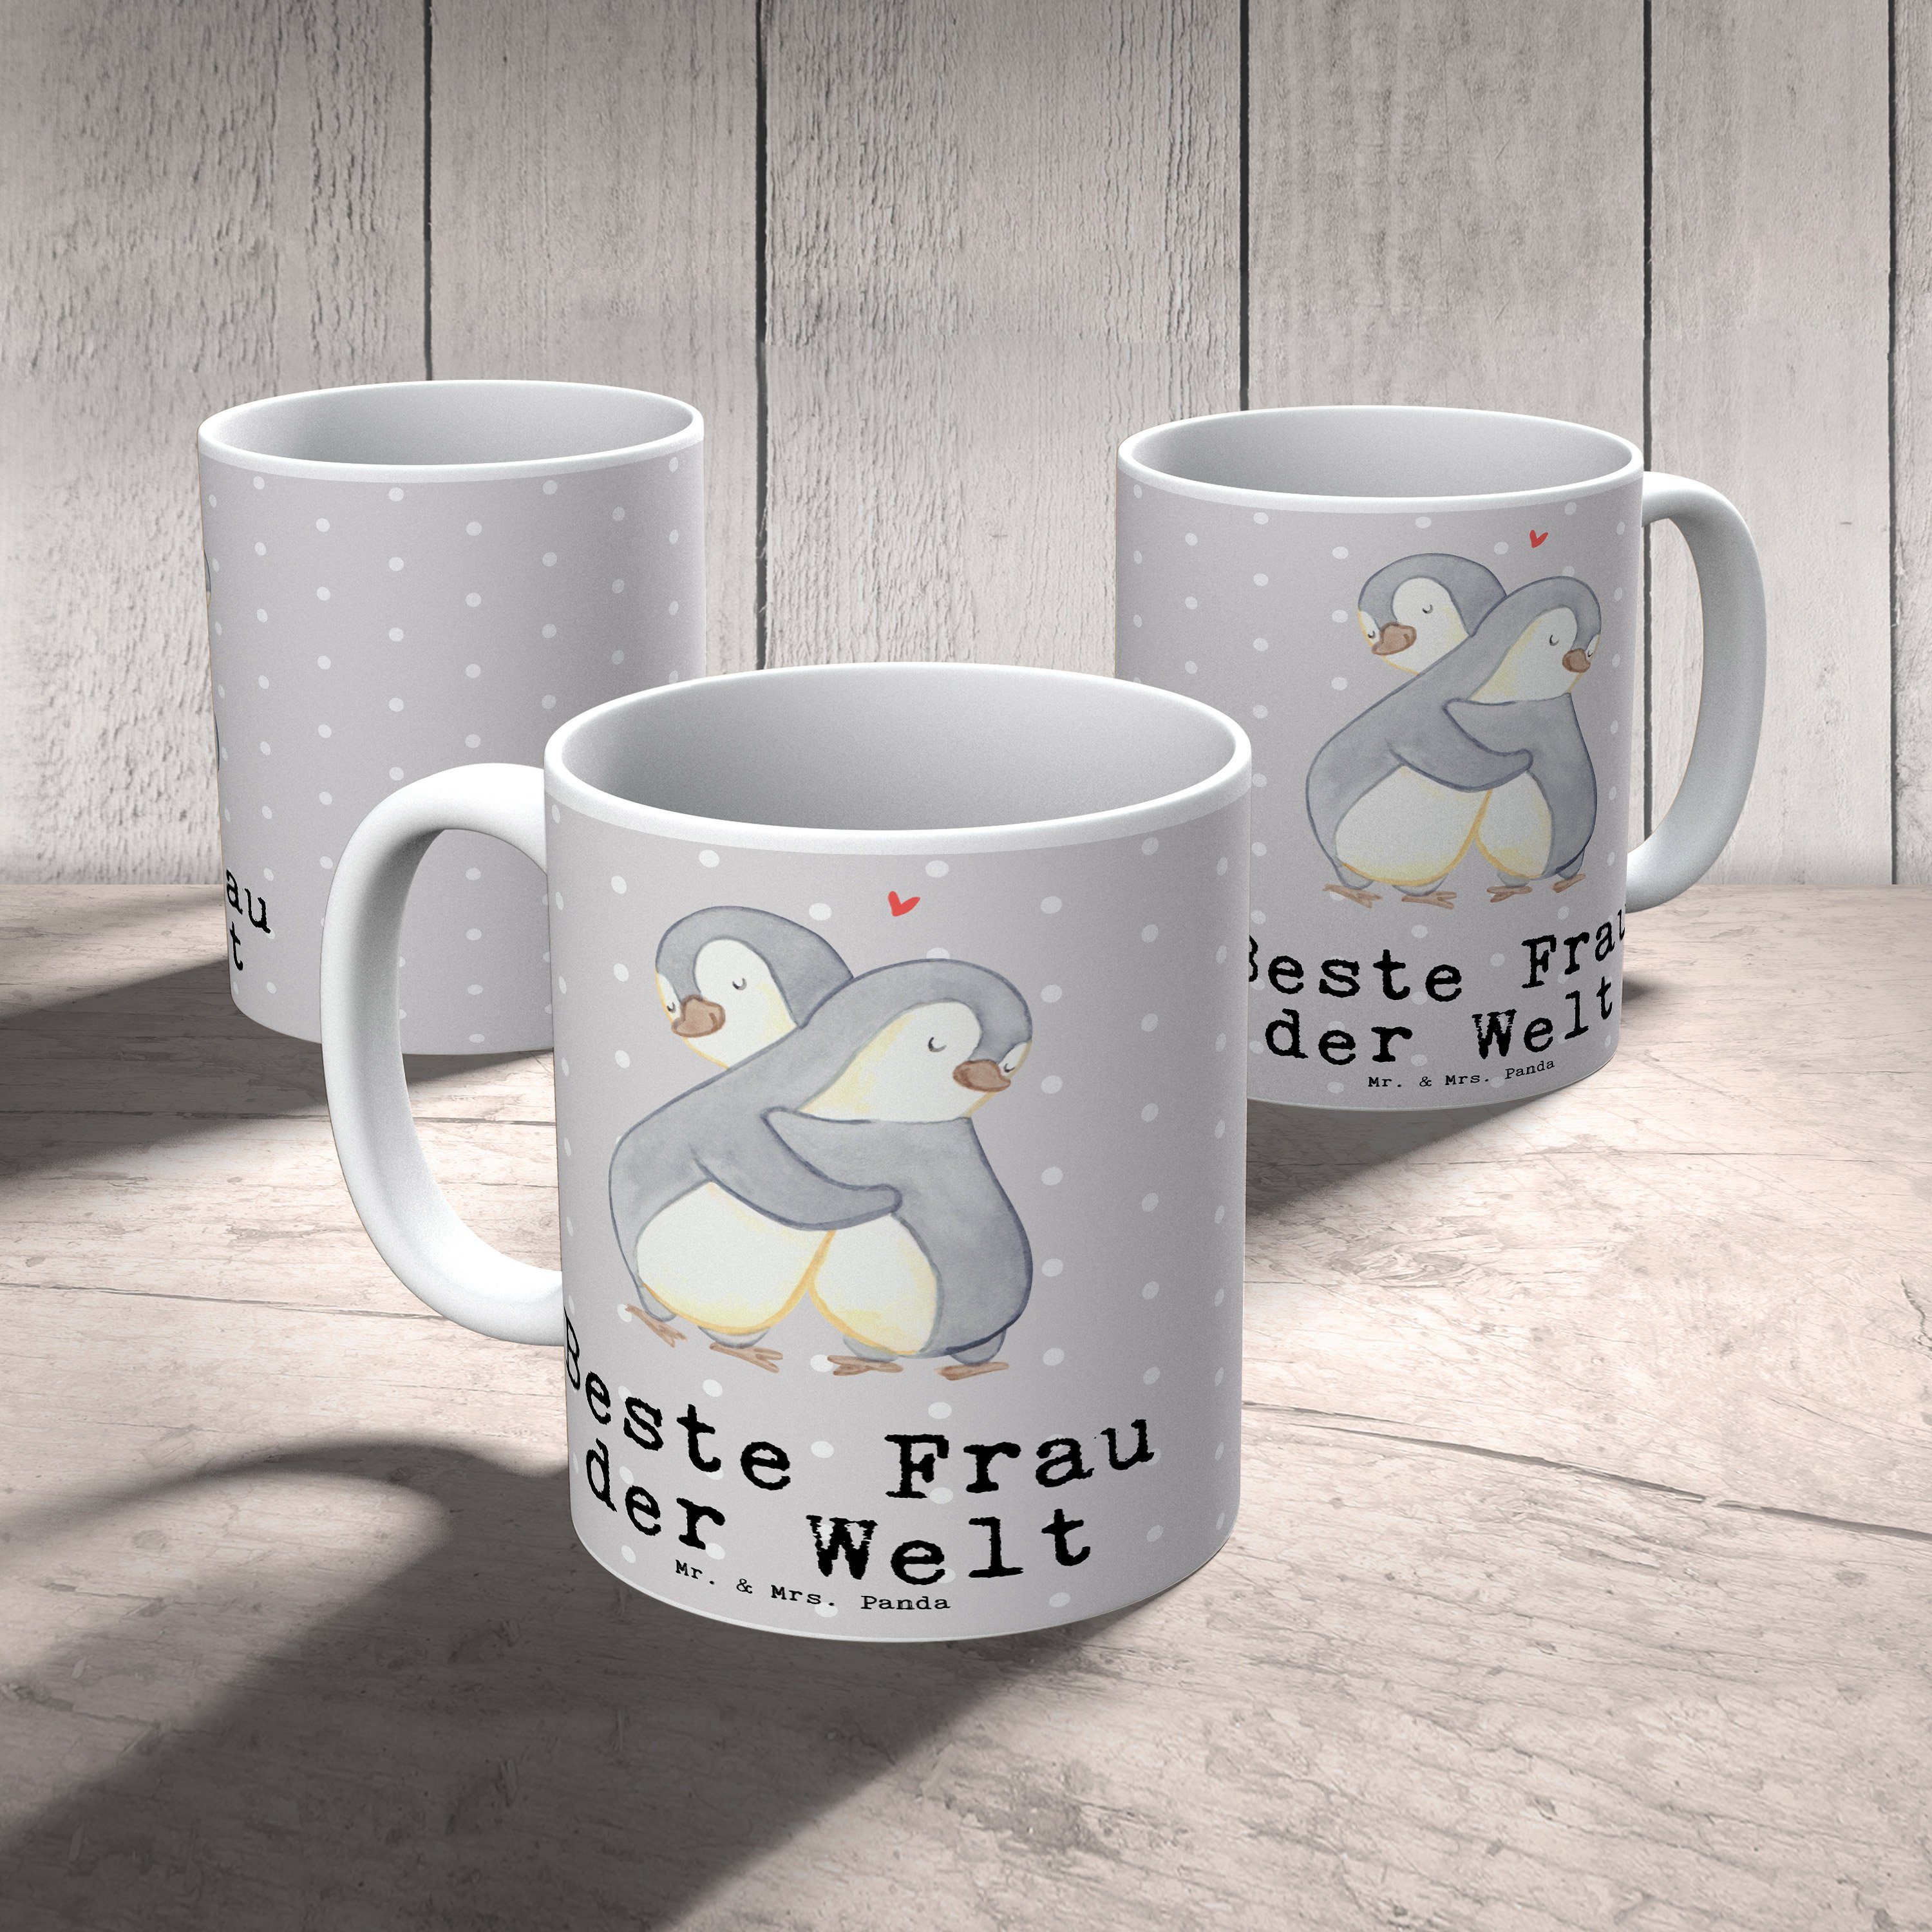 Mrs. Danke, Welt Tasse Beste & Panda Frau Porzell, - - Grau der Pinguin Geschenk, Keramik Pastell Mr.